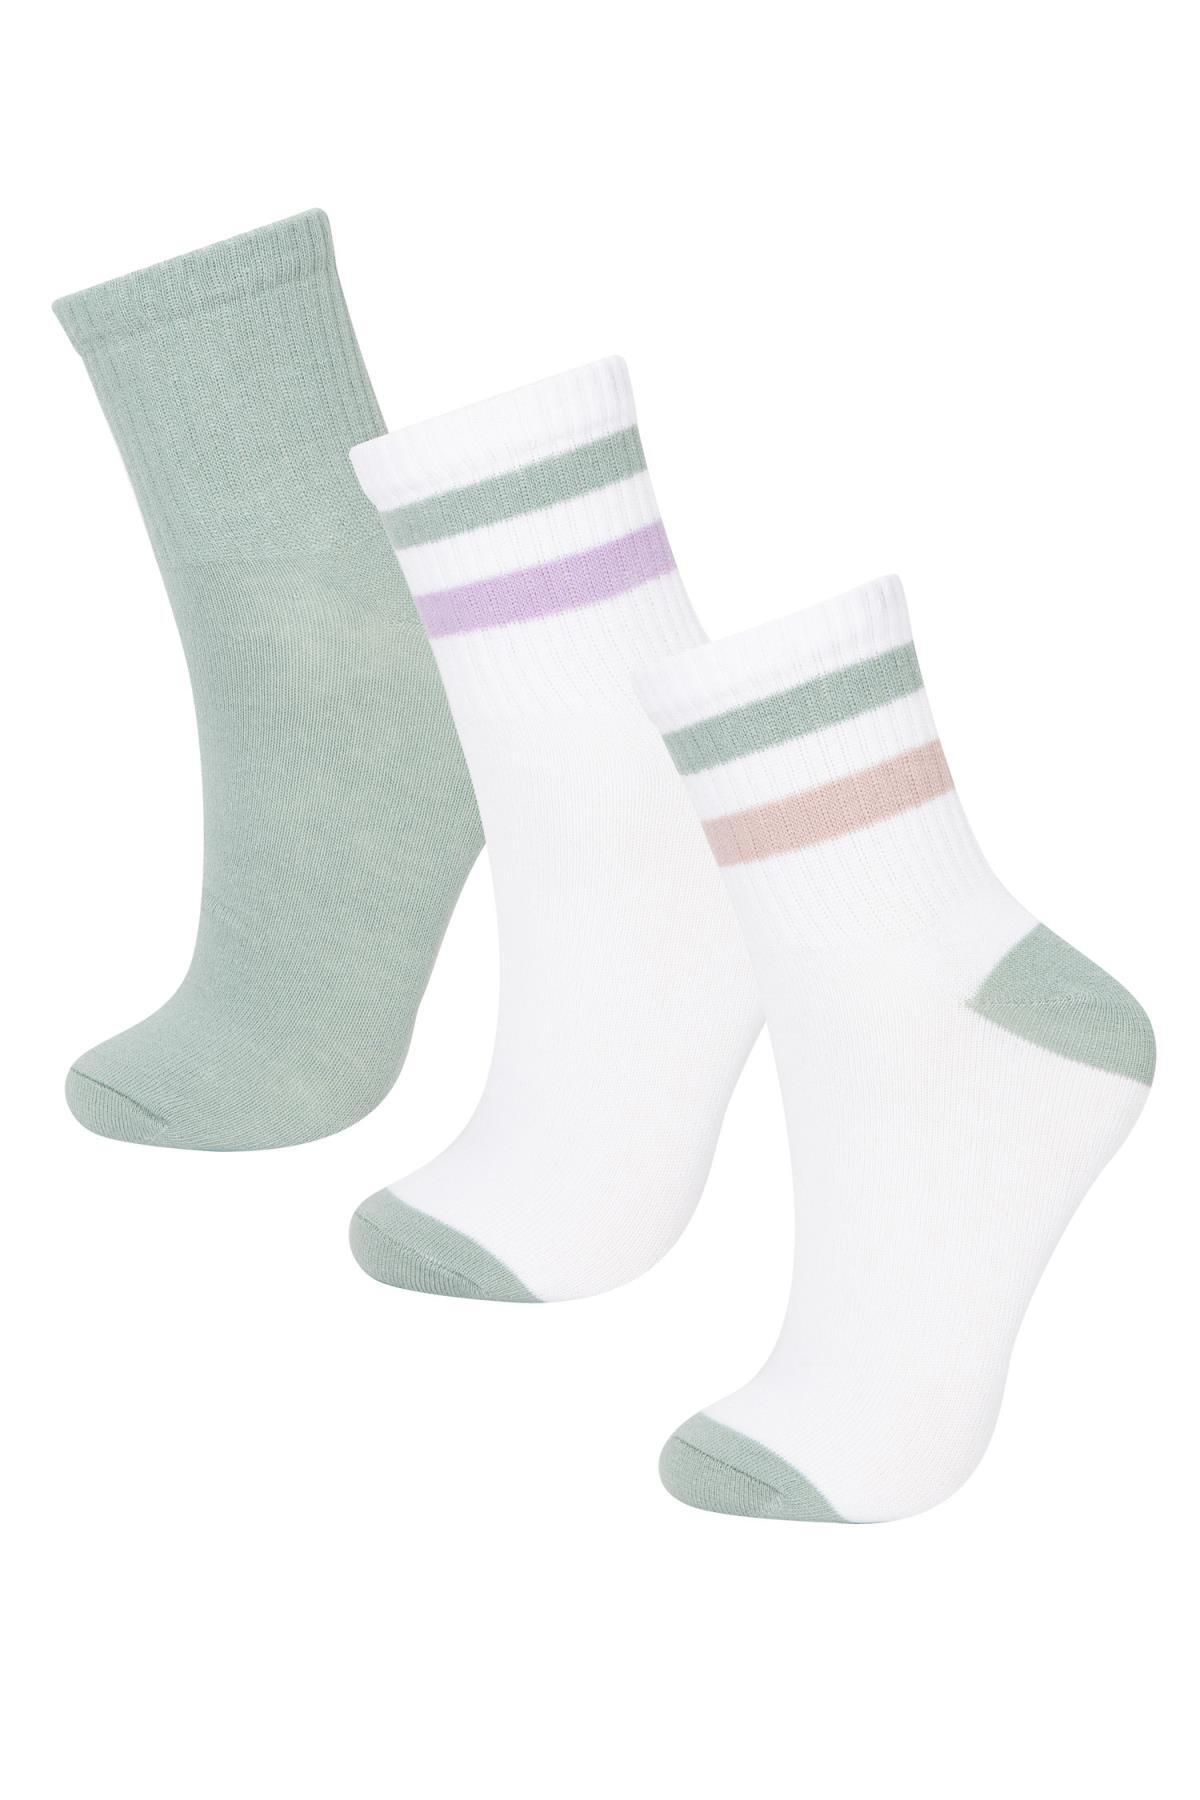 Defacto Kadın 3lü Pamuklu Soket Çorap C0674axns